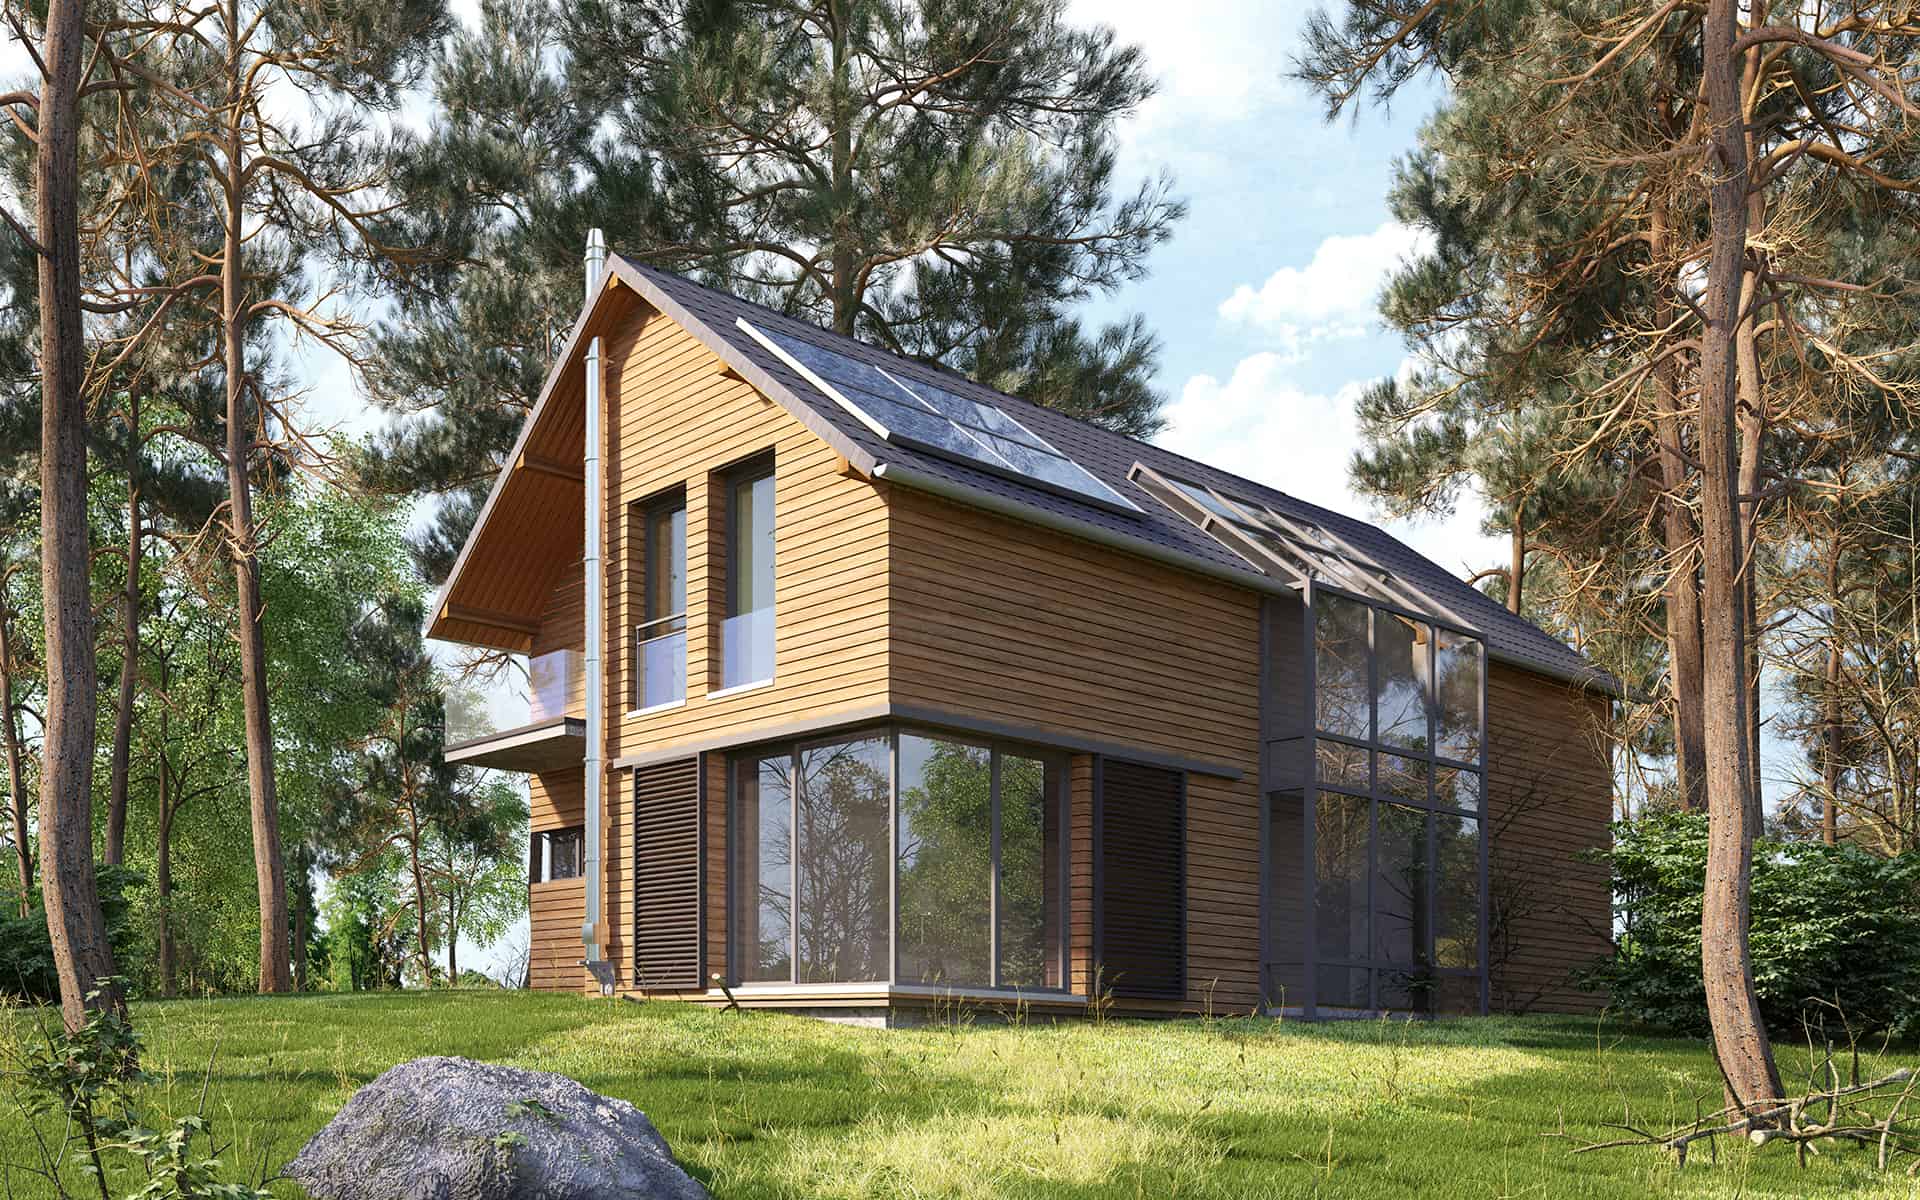 Building an Eco-Friendly Home Near Bainbridge Island Washington (WA) with sustainable architecture